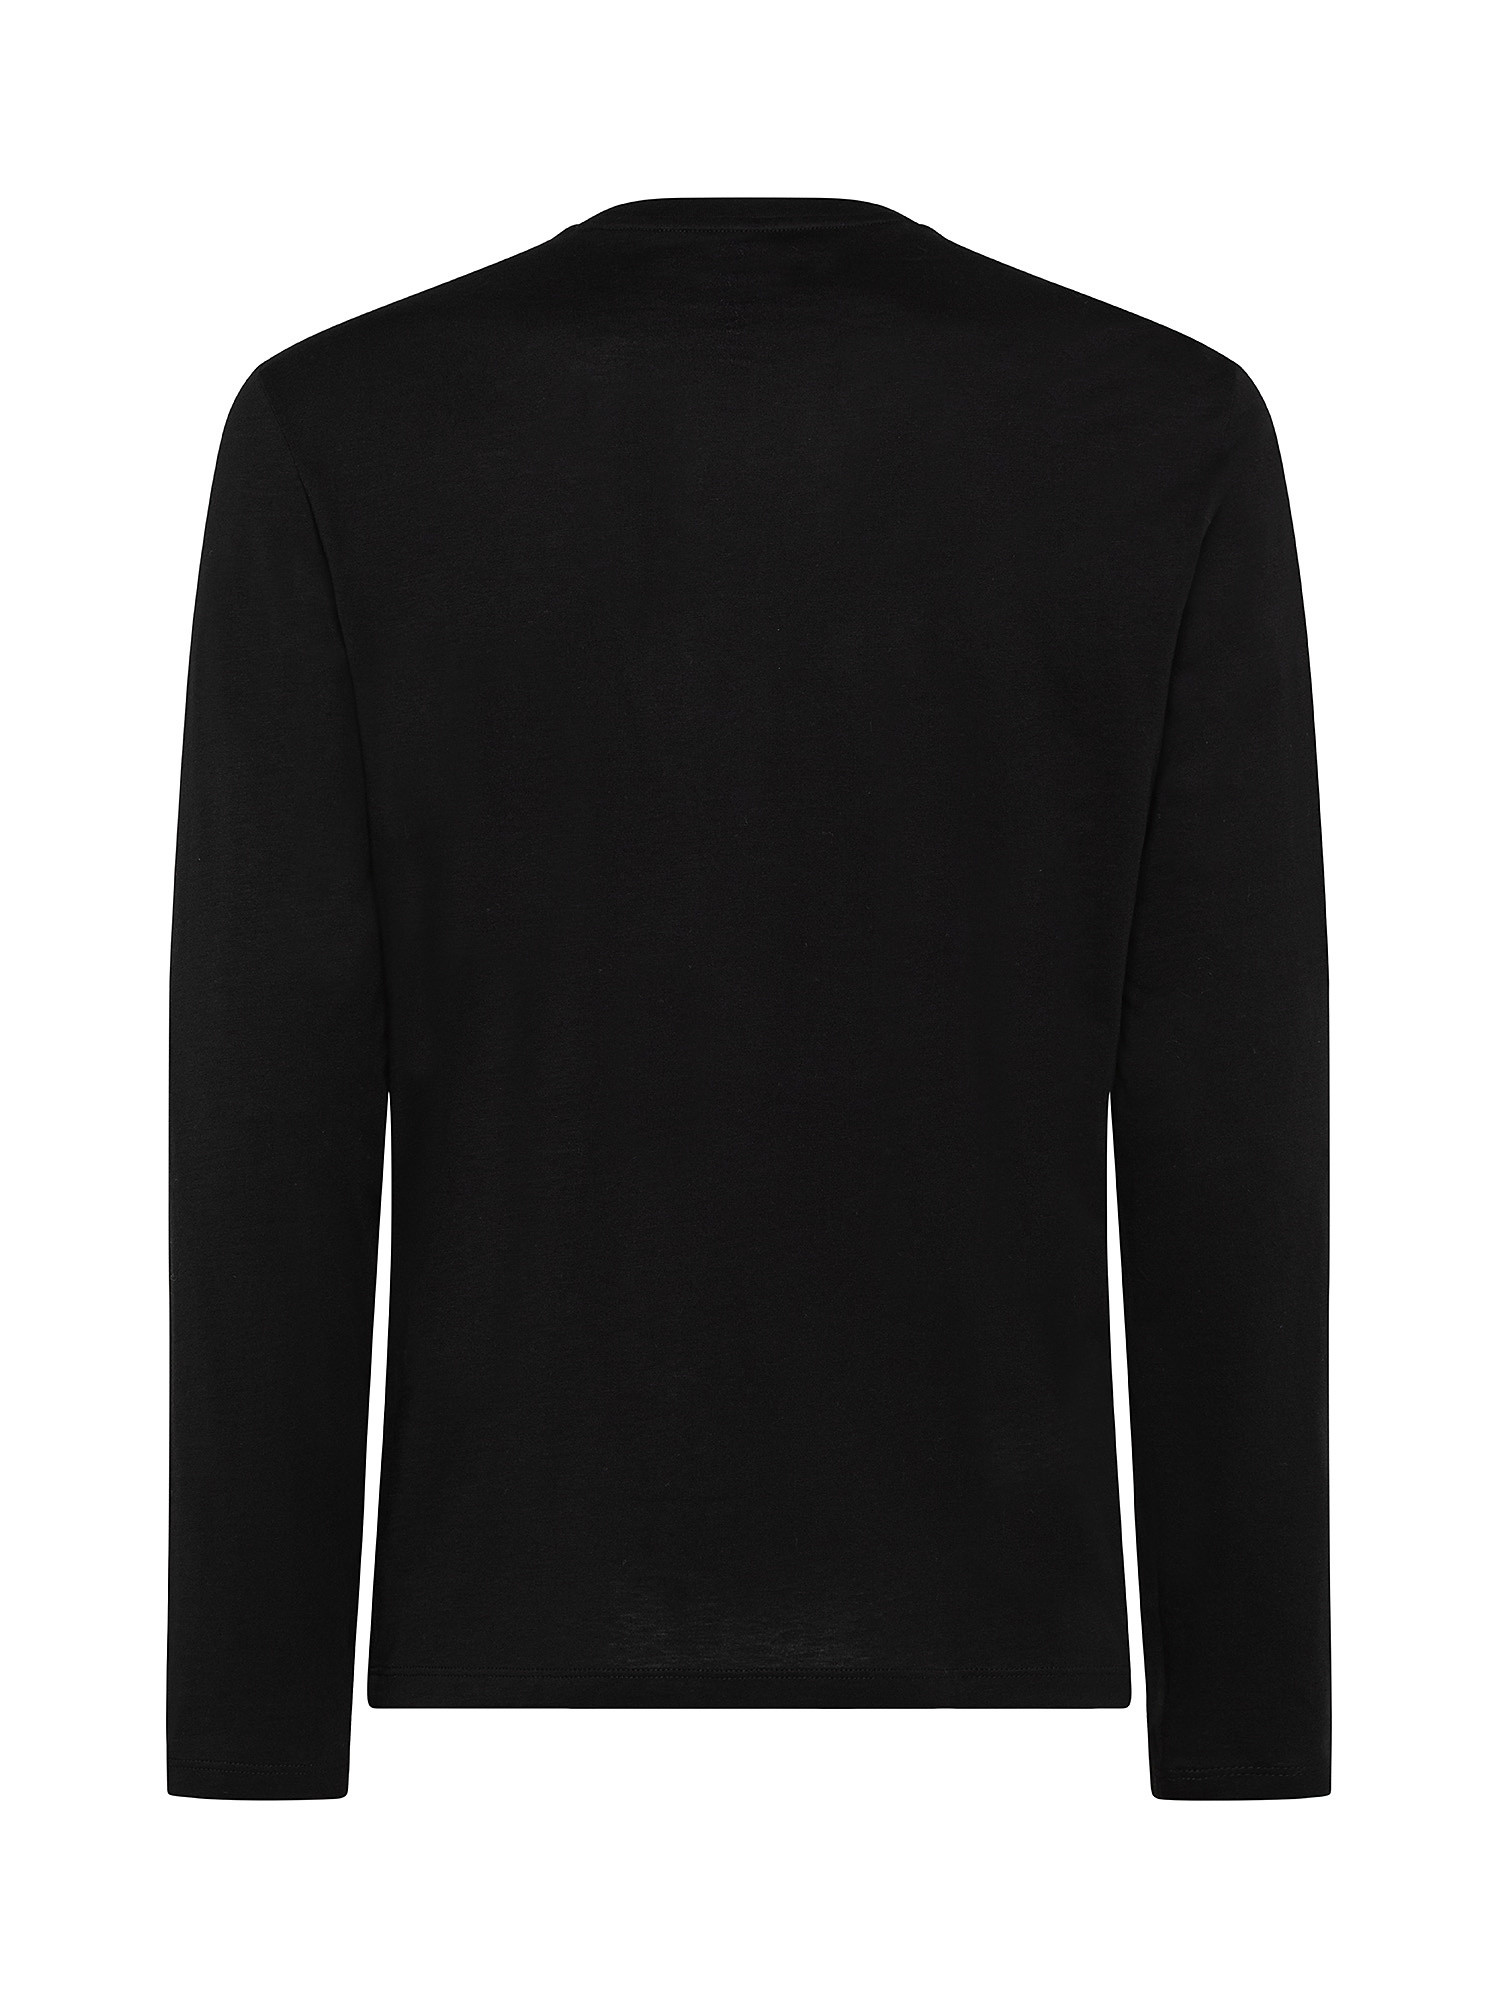 Sweater, Black, large image number 1